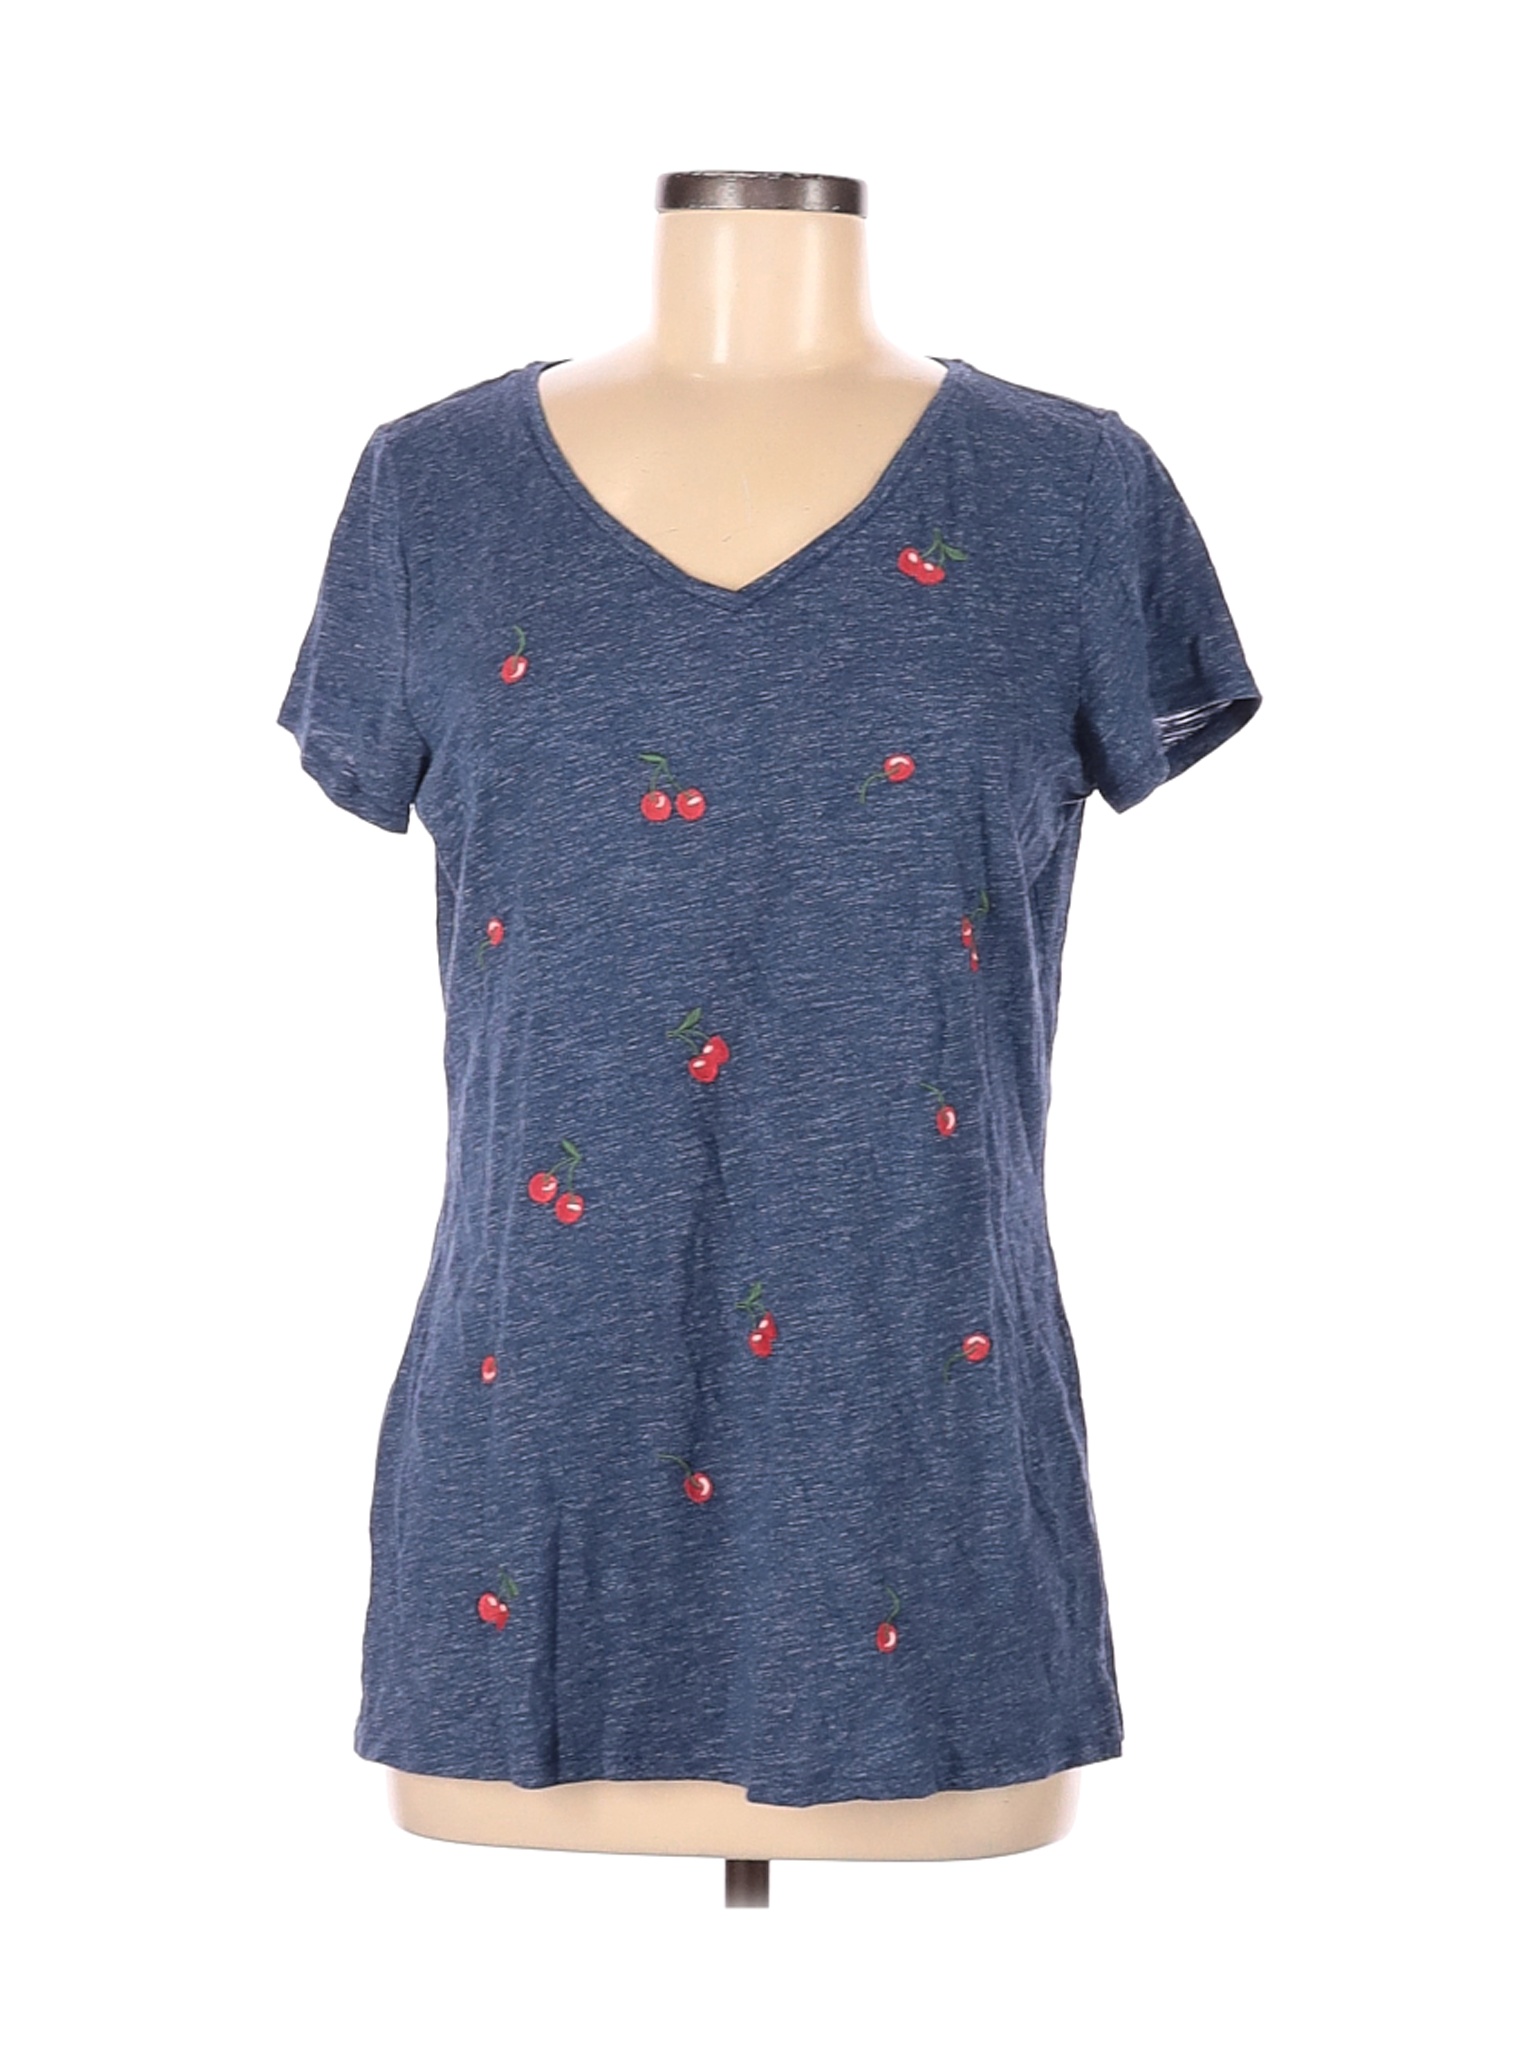 St. John's Bay Women Blue Short Sleeve T-Shirt M | eBay